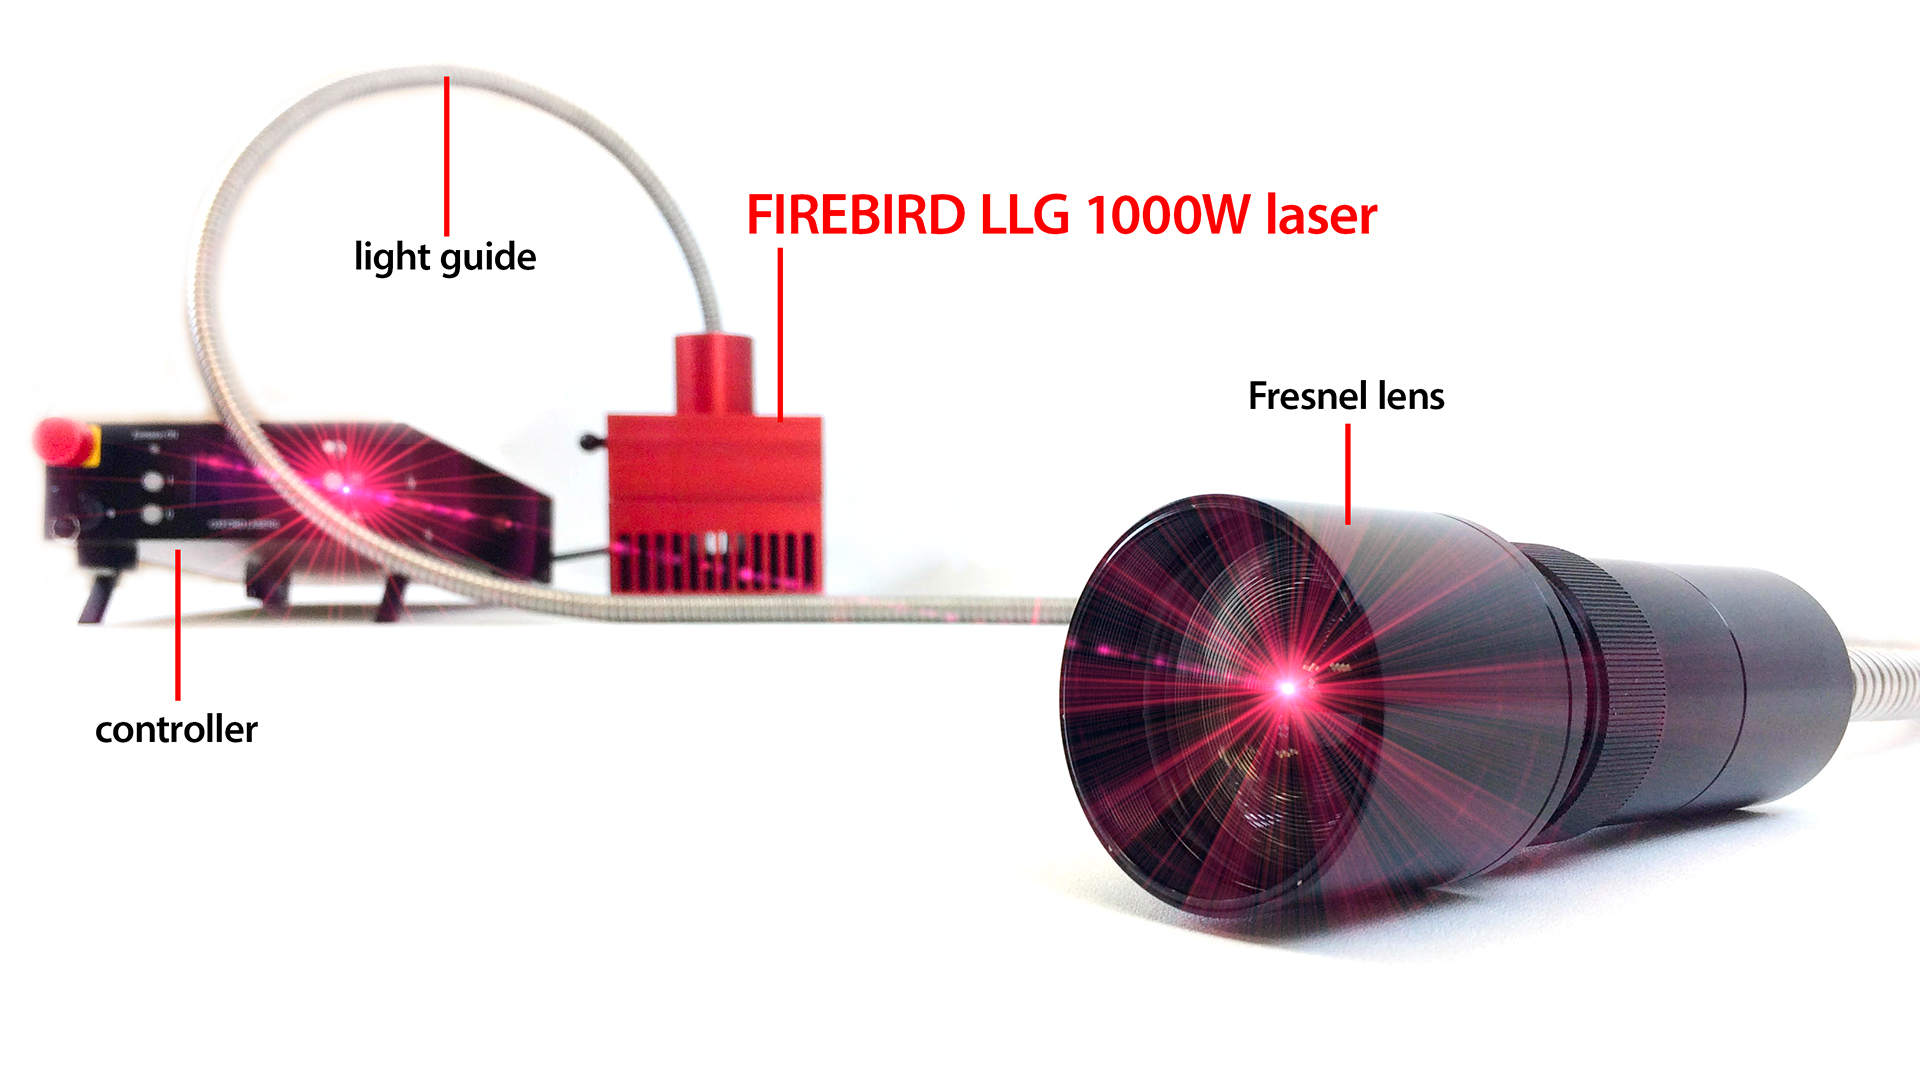 Oxford Lasers FireBird LLG 1000W laser.